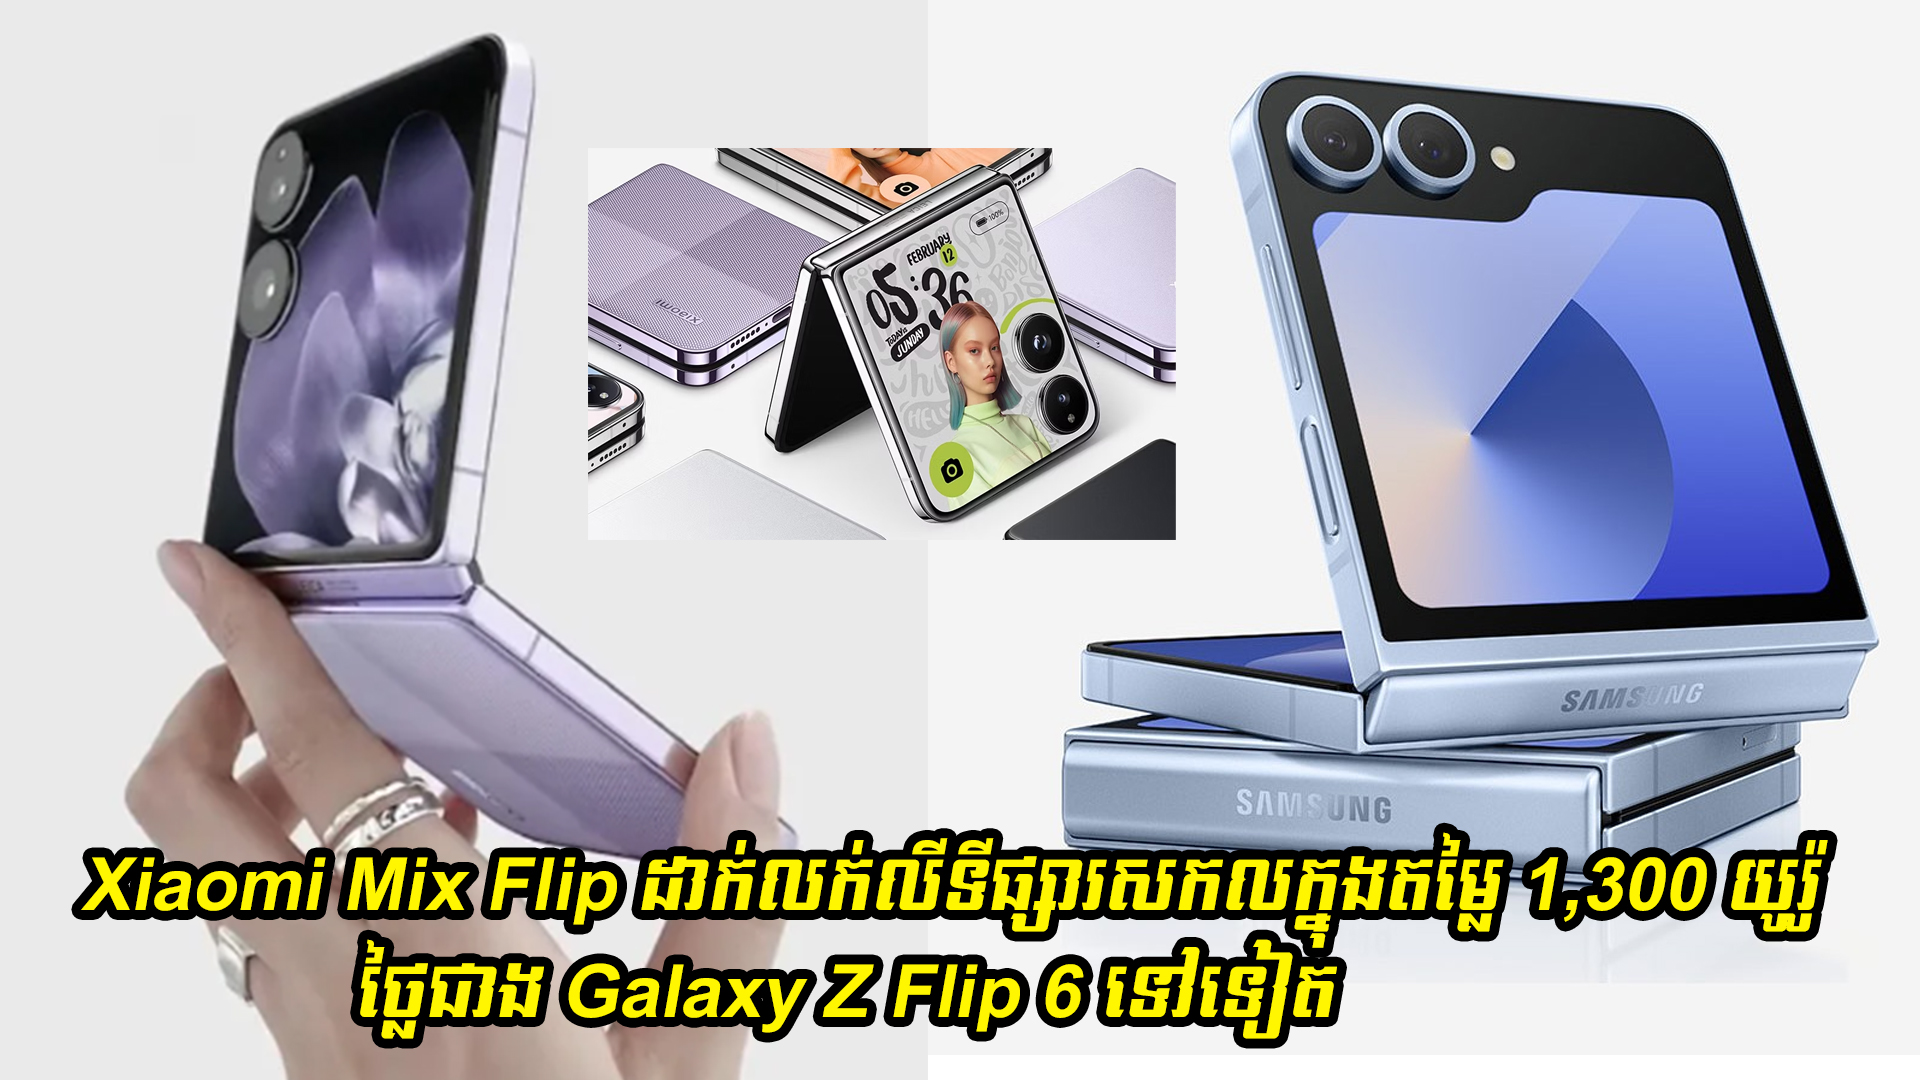 Xiaomi Mix Flip ដាក់លក់លីទីផ្សារសកលក្នុងតម្លៃ 1,300 យូរ៉ូ ថ្លៃជាង Galaxy Z Flip 6 ទៅទៀត